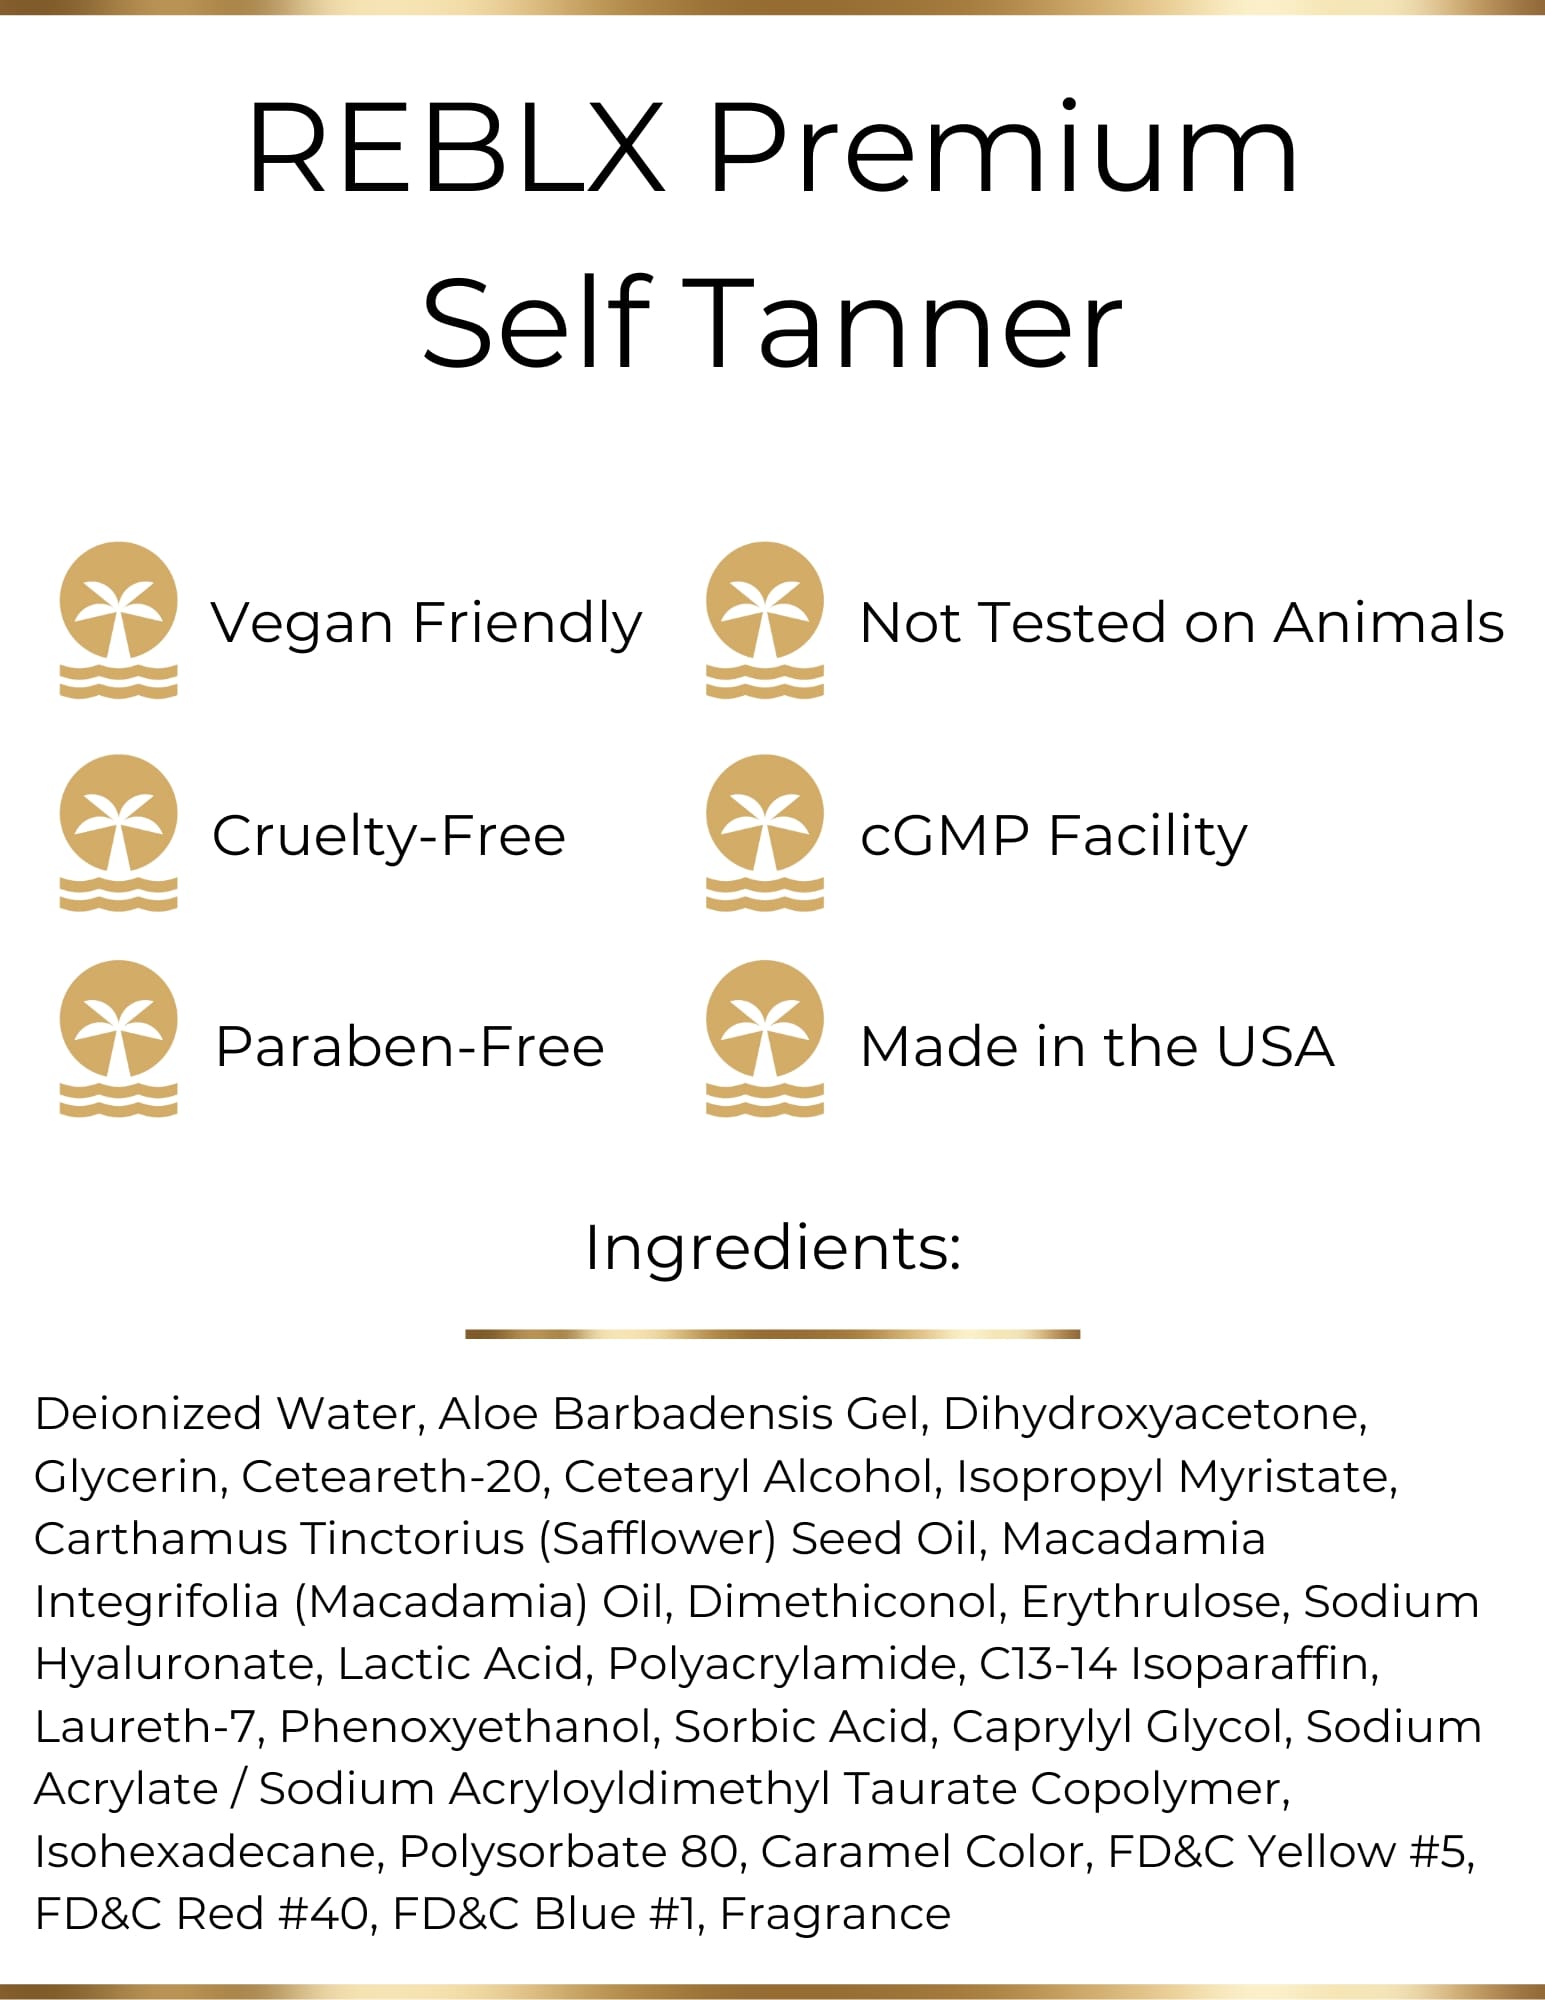 REBLX Premium Self Tanner - Ingredients